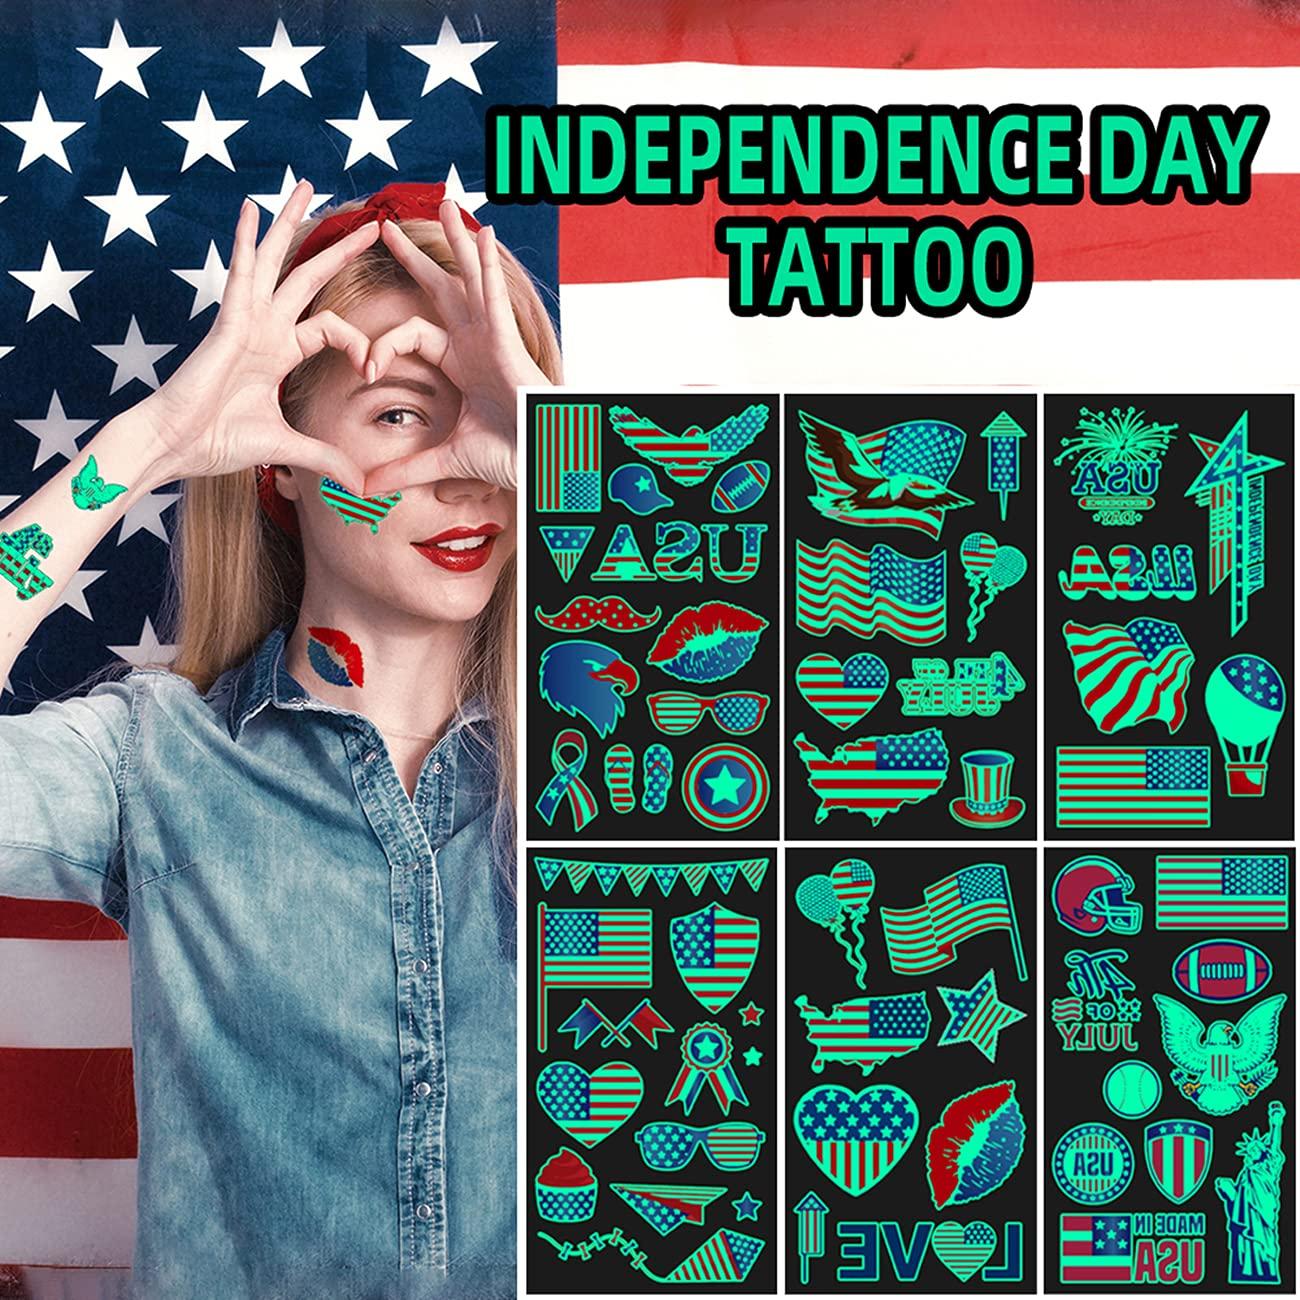 Happy Independence Day! — LuckyFish, Inc. and Tattoo Santa Barbara